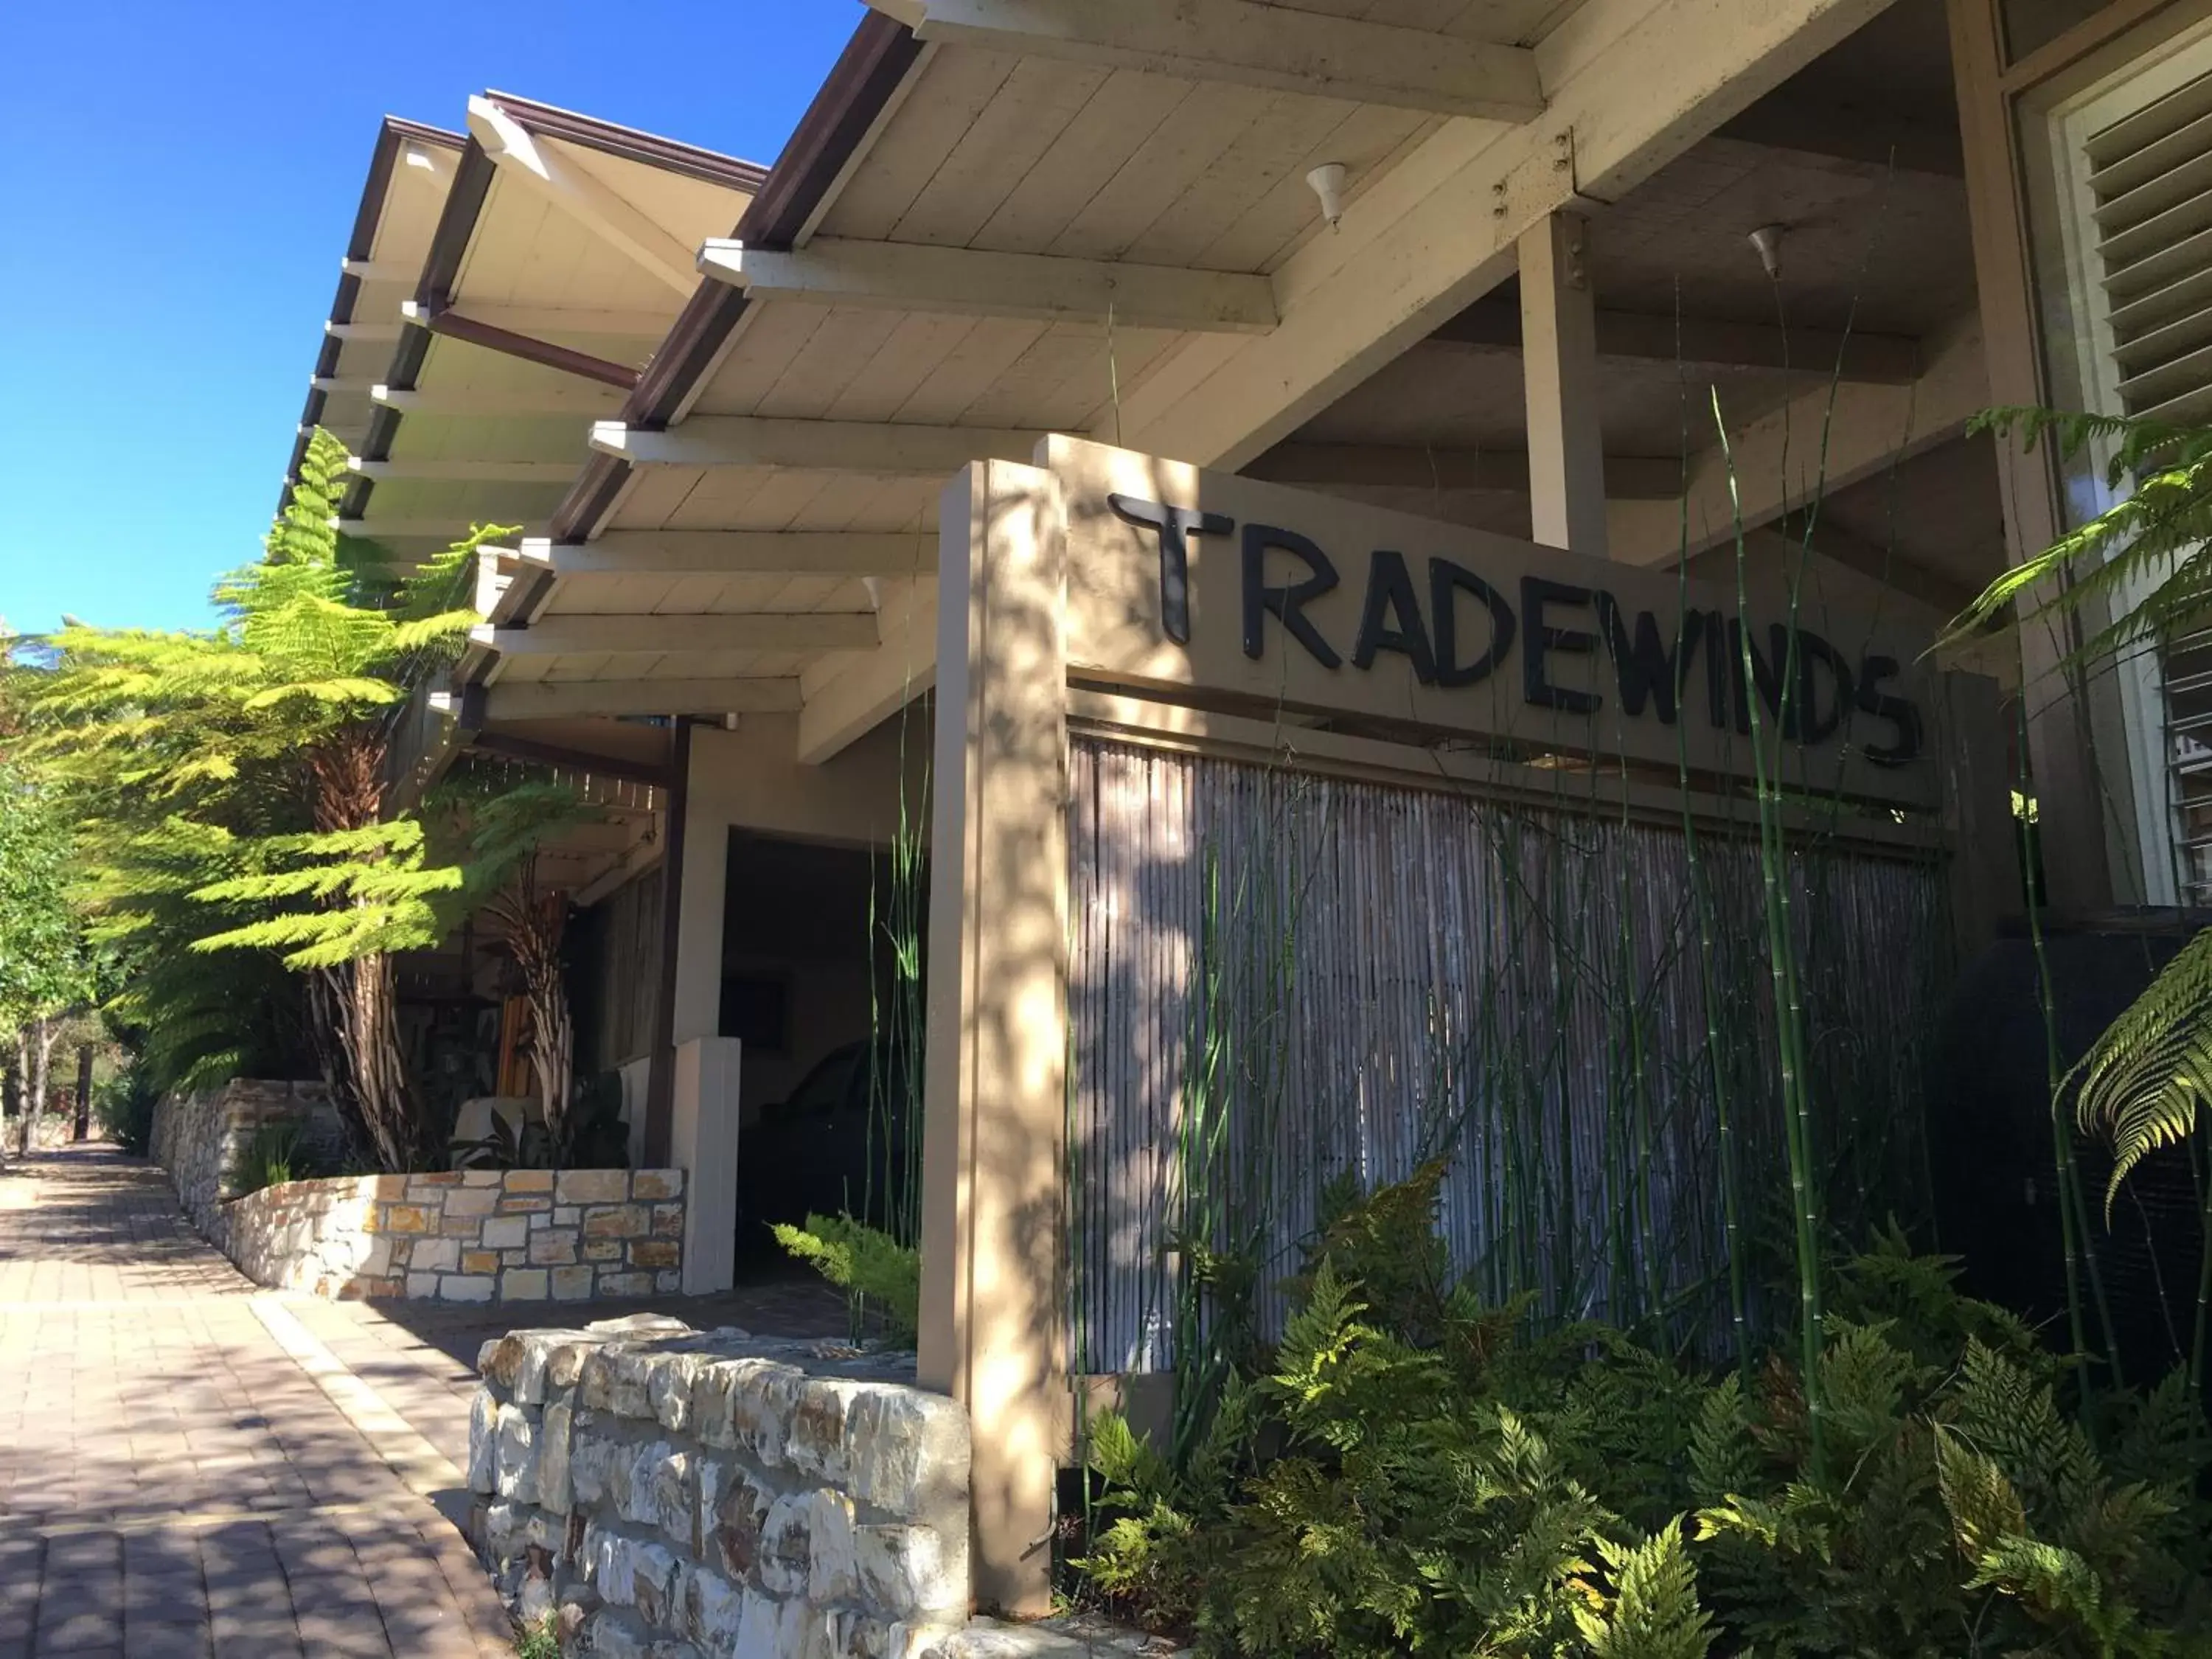 Facade/Entrance in Tradewinds Carmel